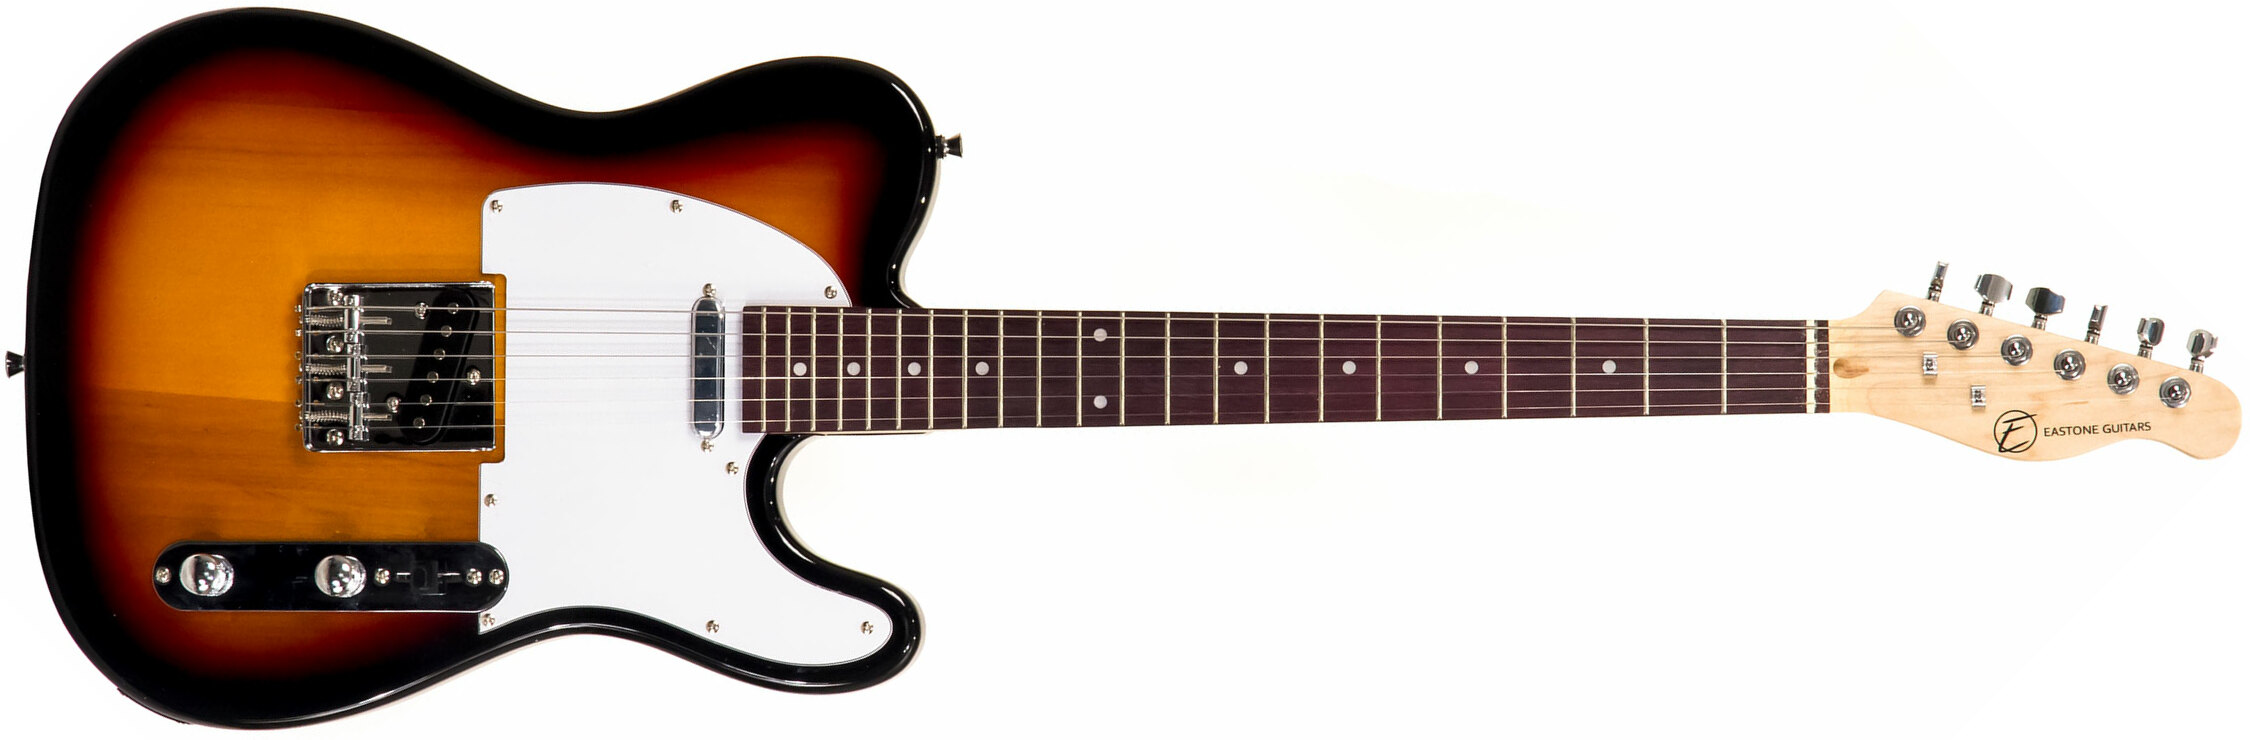 Eastone Tl70 Ss Ht Pur - 3 Tone Sunburst - Televorm elektrische gitaar - Main picture